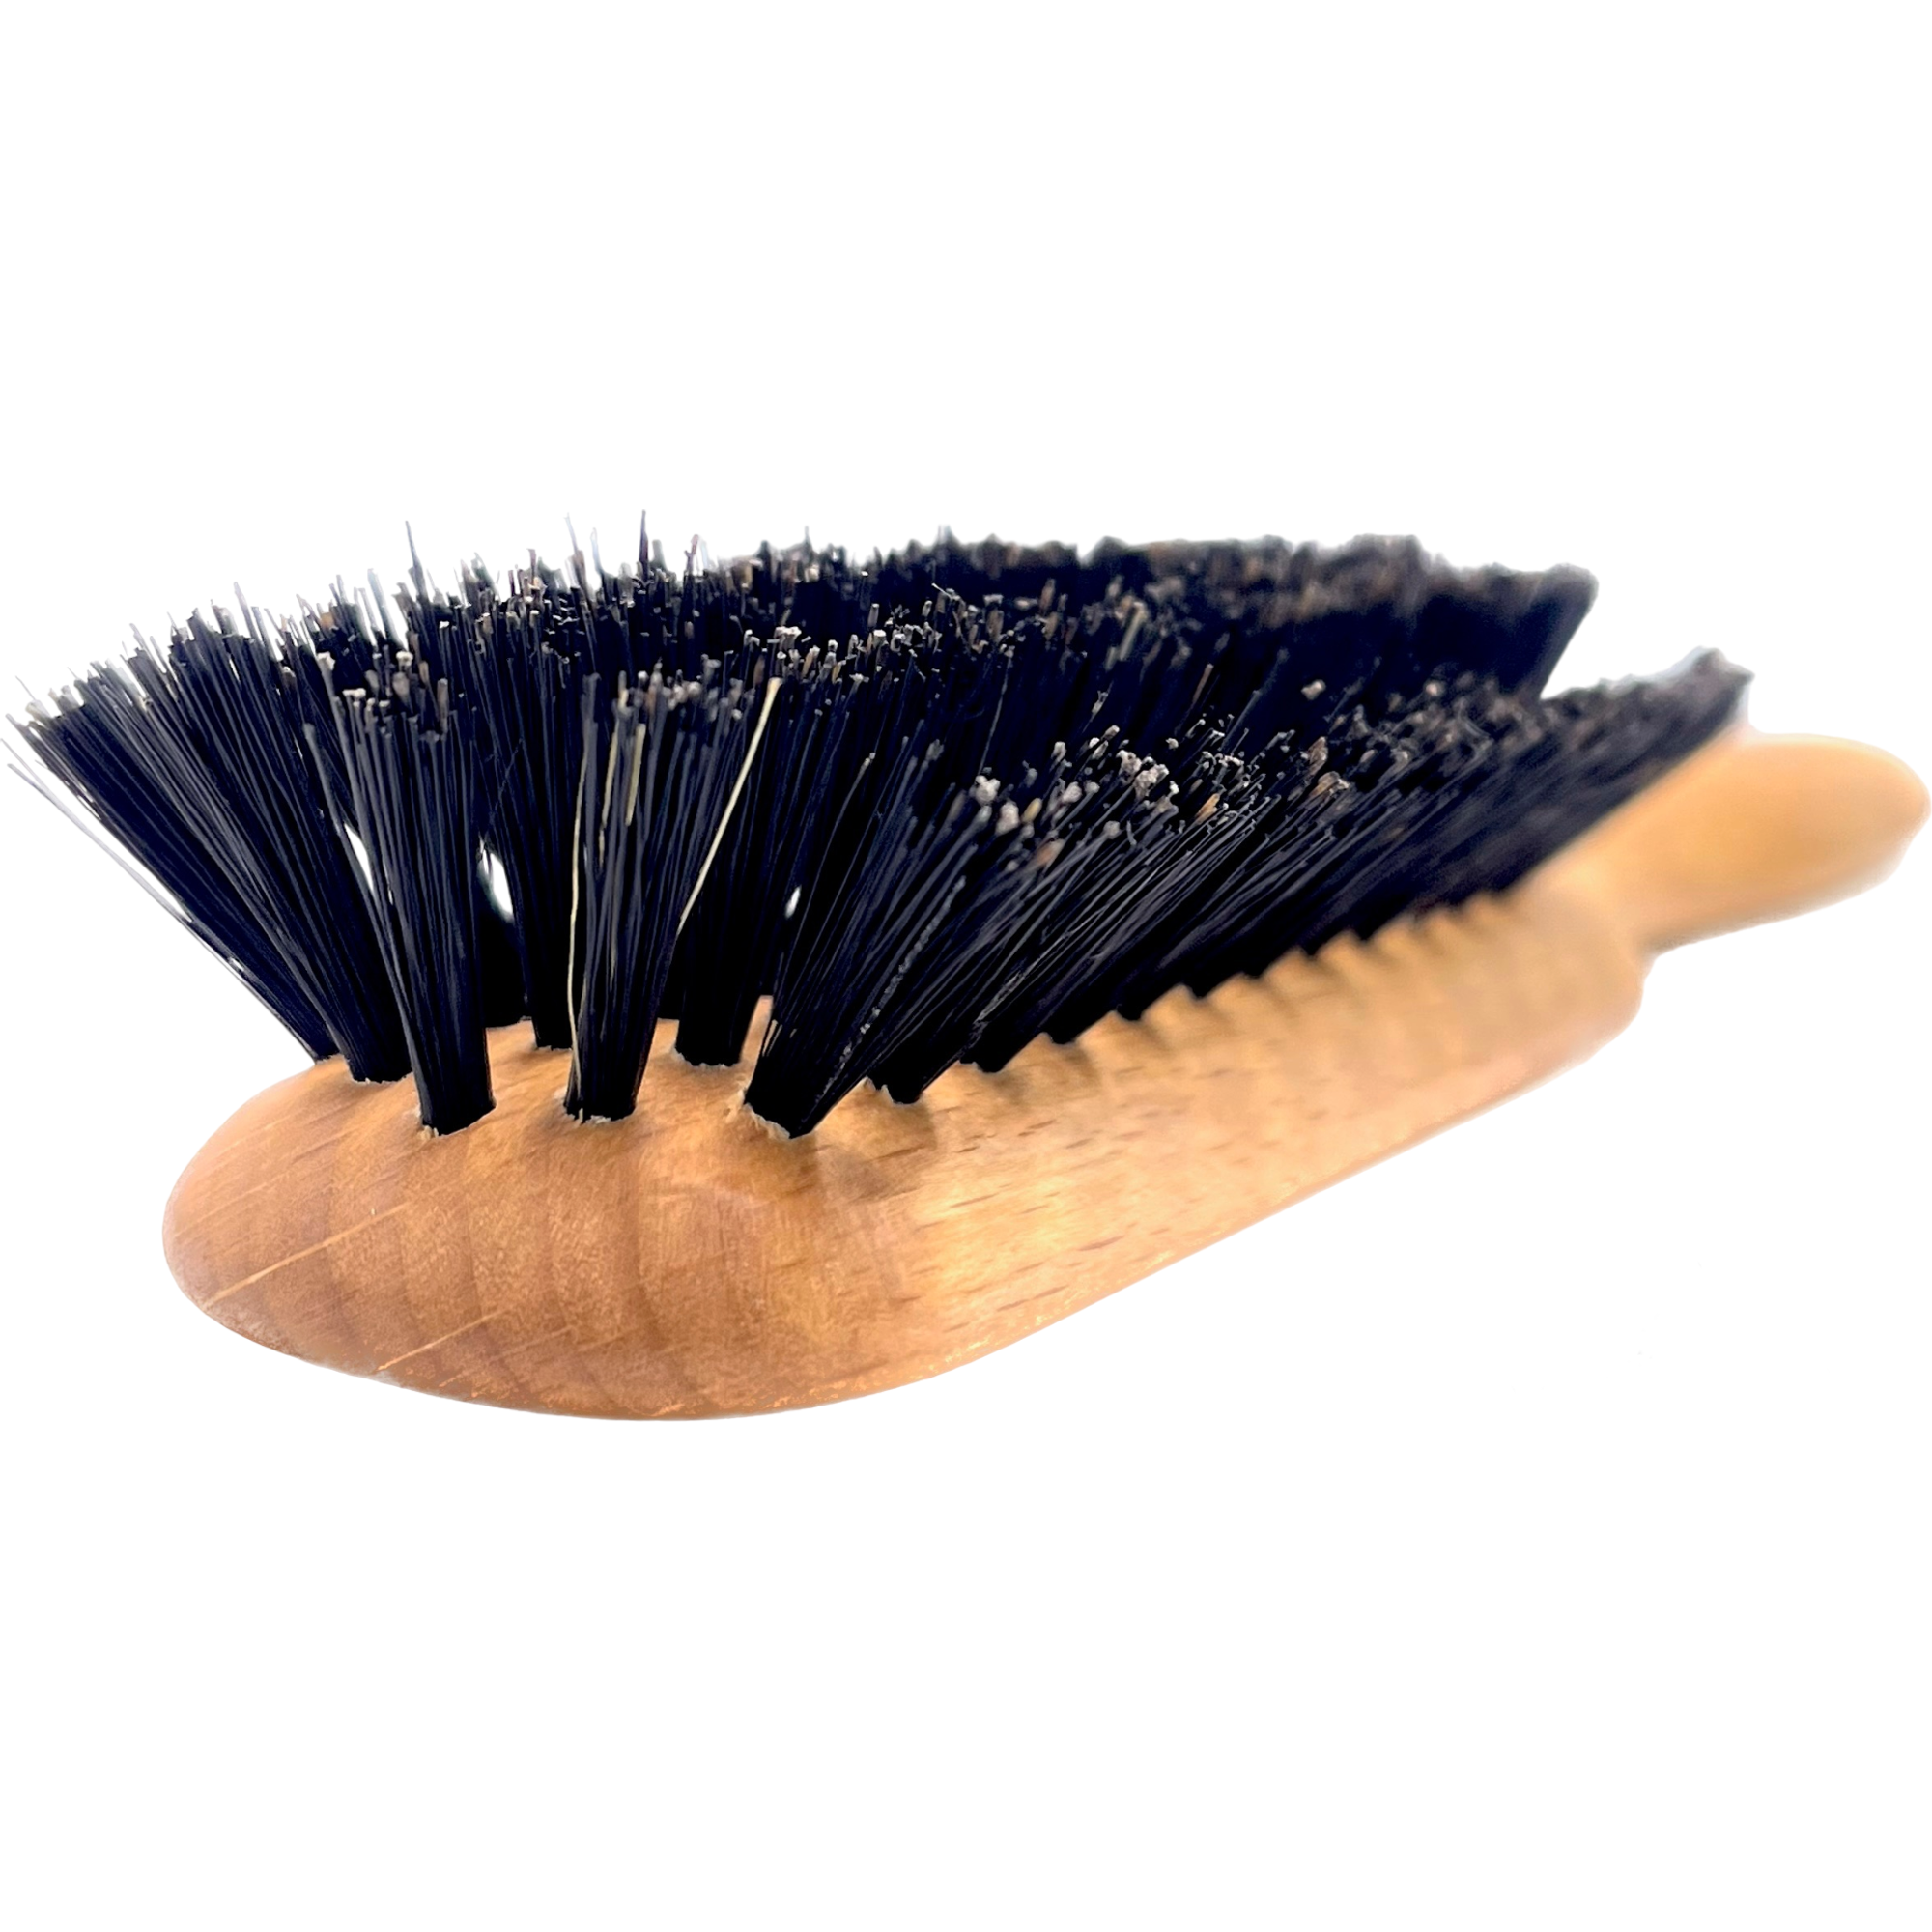 Dural Hair Brush 5 Rows Beech Wood Oiled Wild Boar Bristles